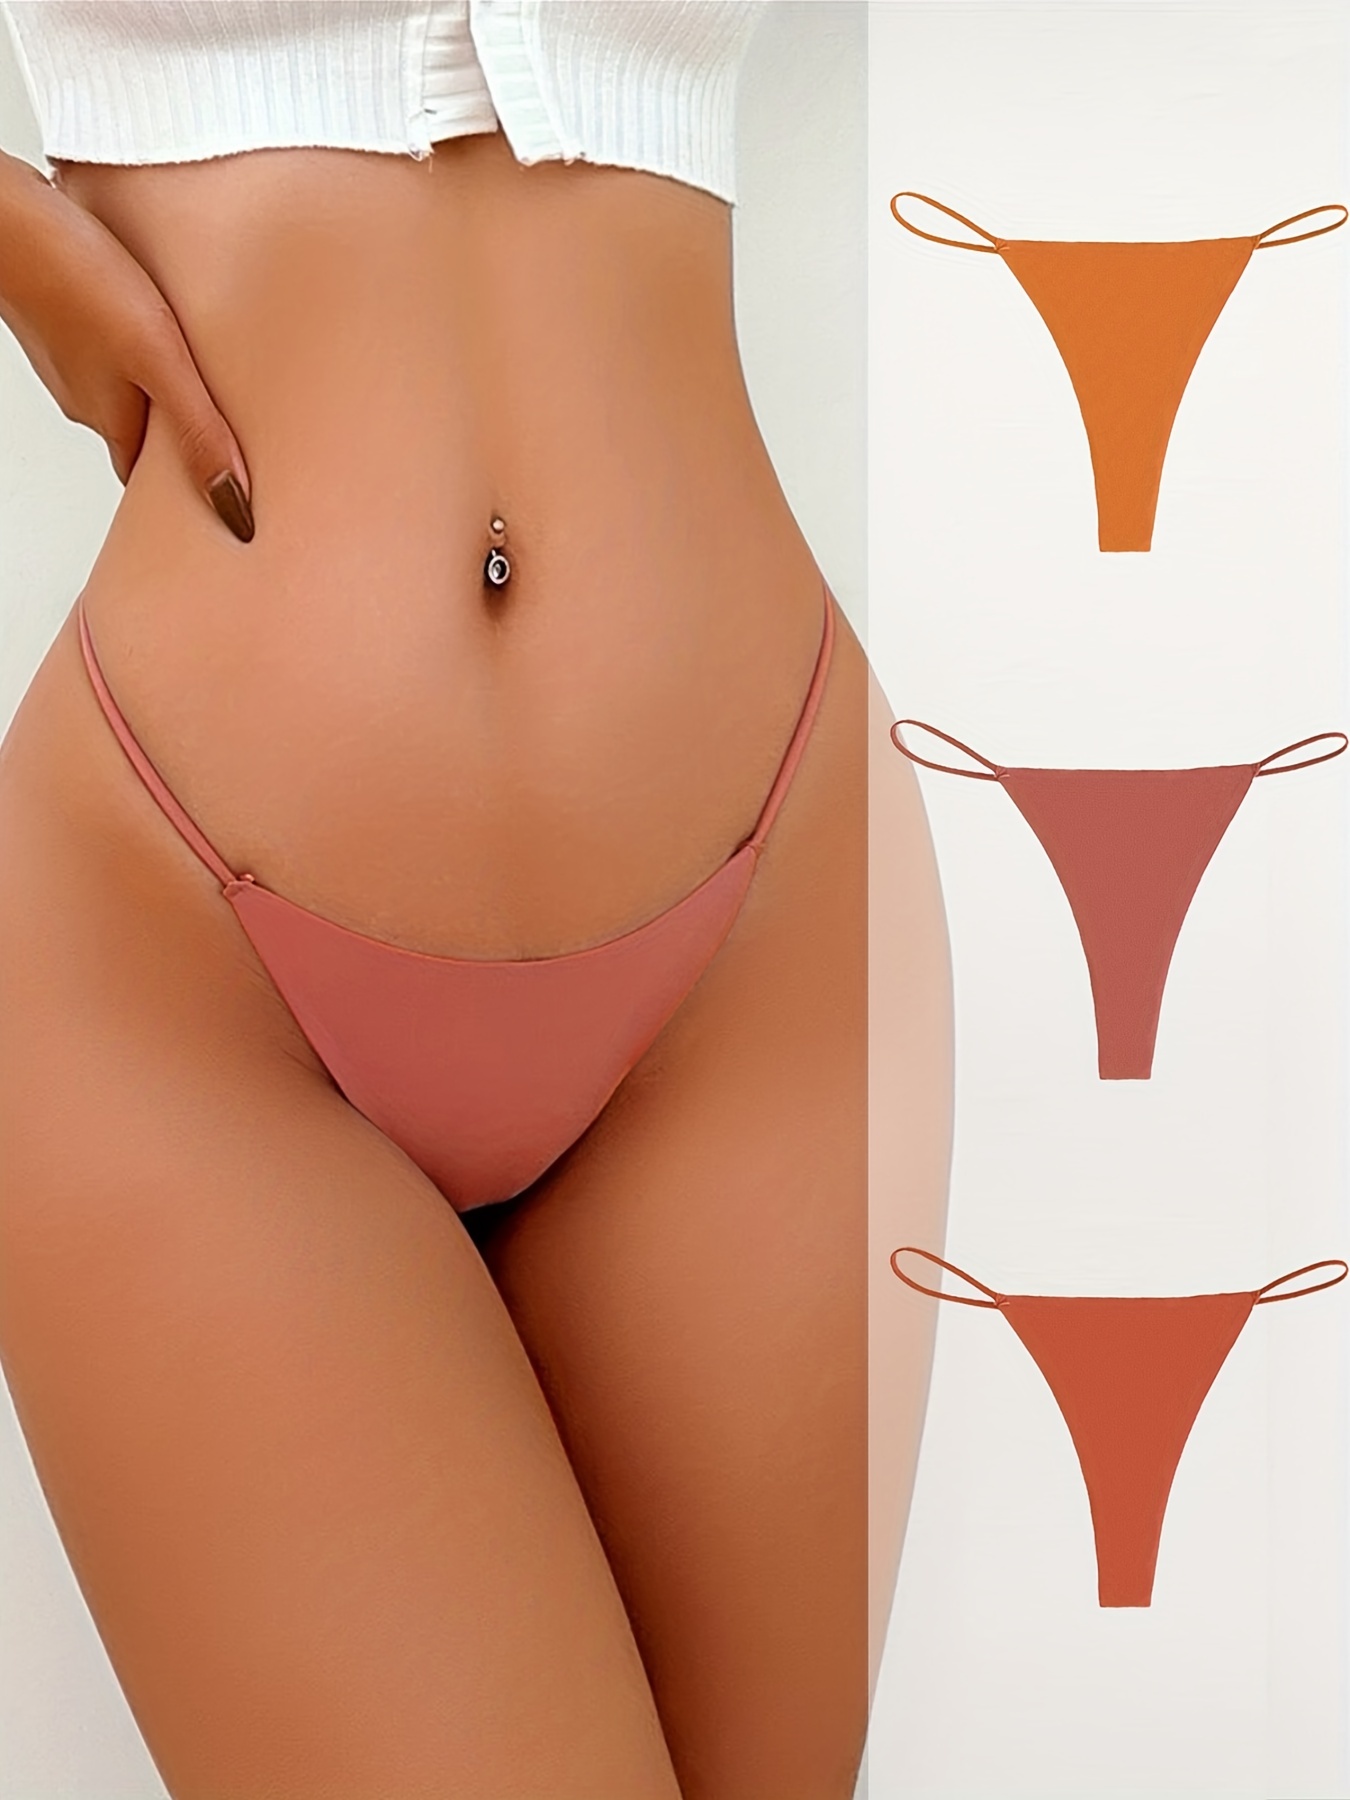 Clear Pantiessexy Lace Briefs 3pcs Set - Transparent Nylon Panties For  Women